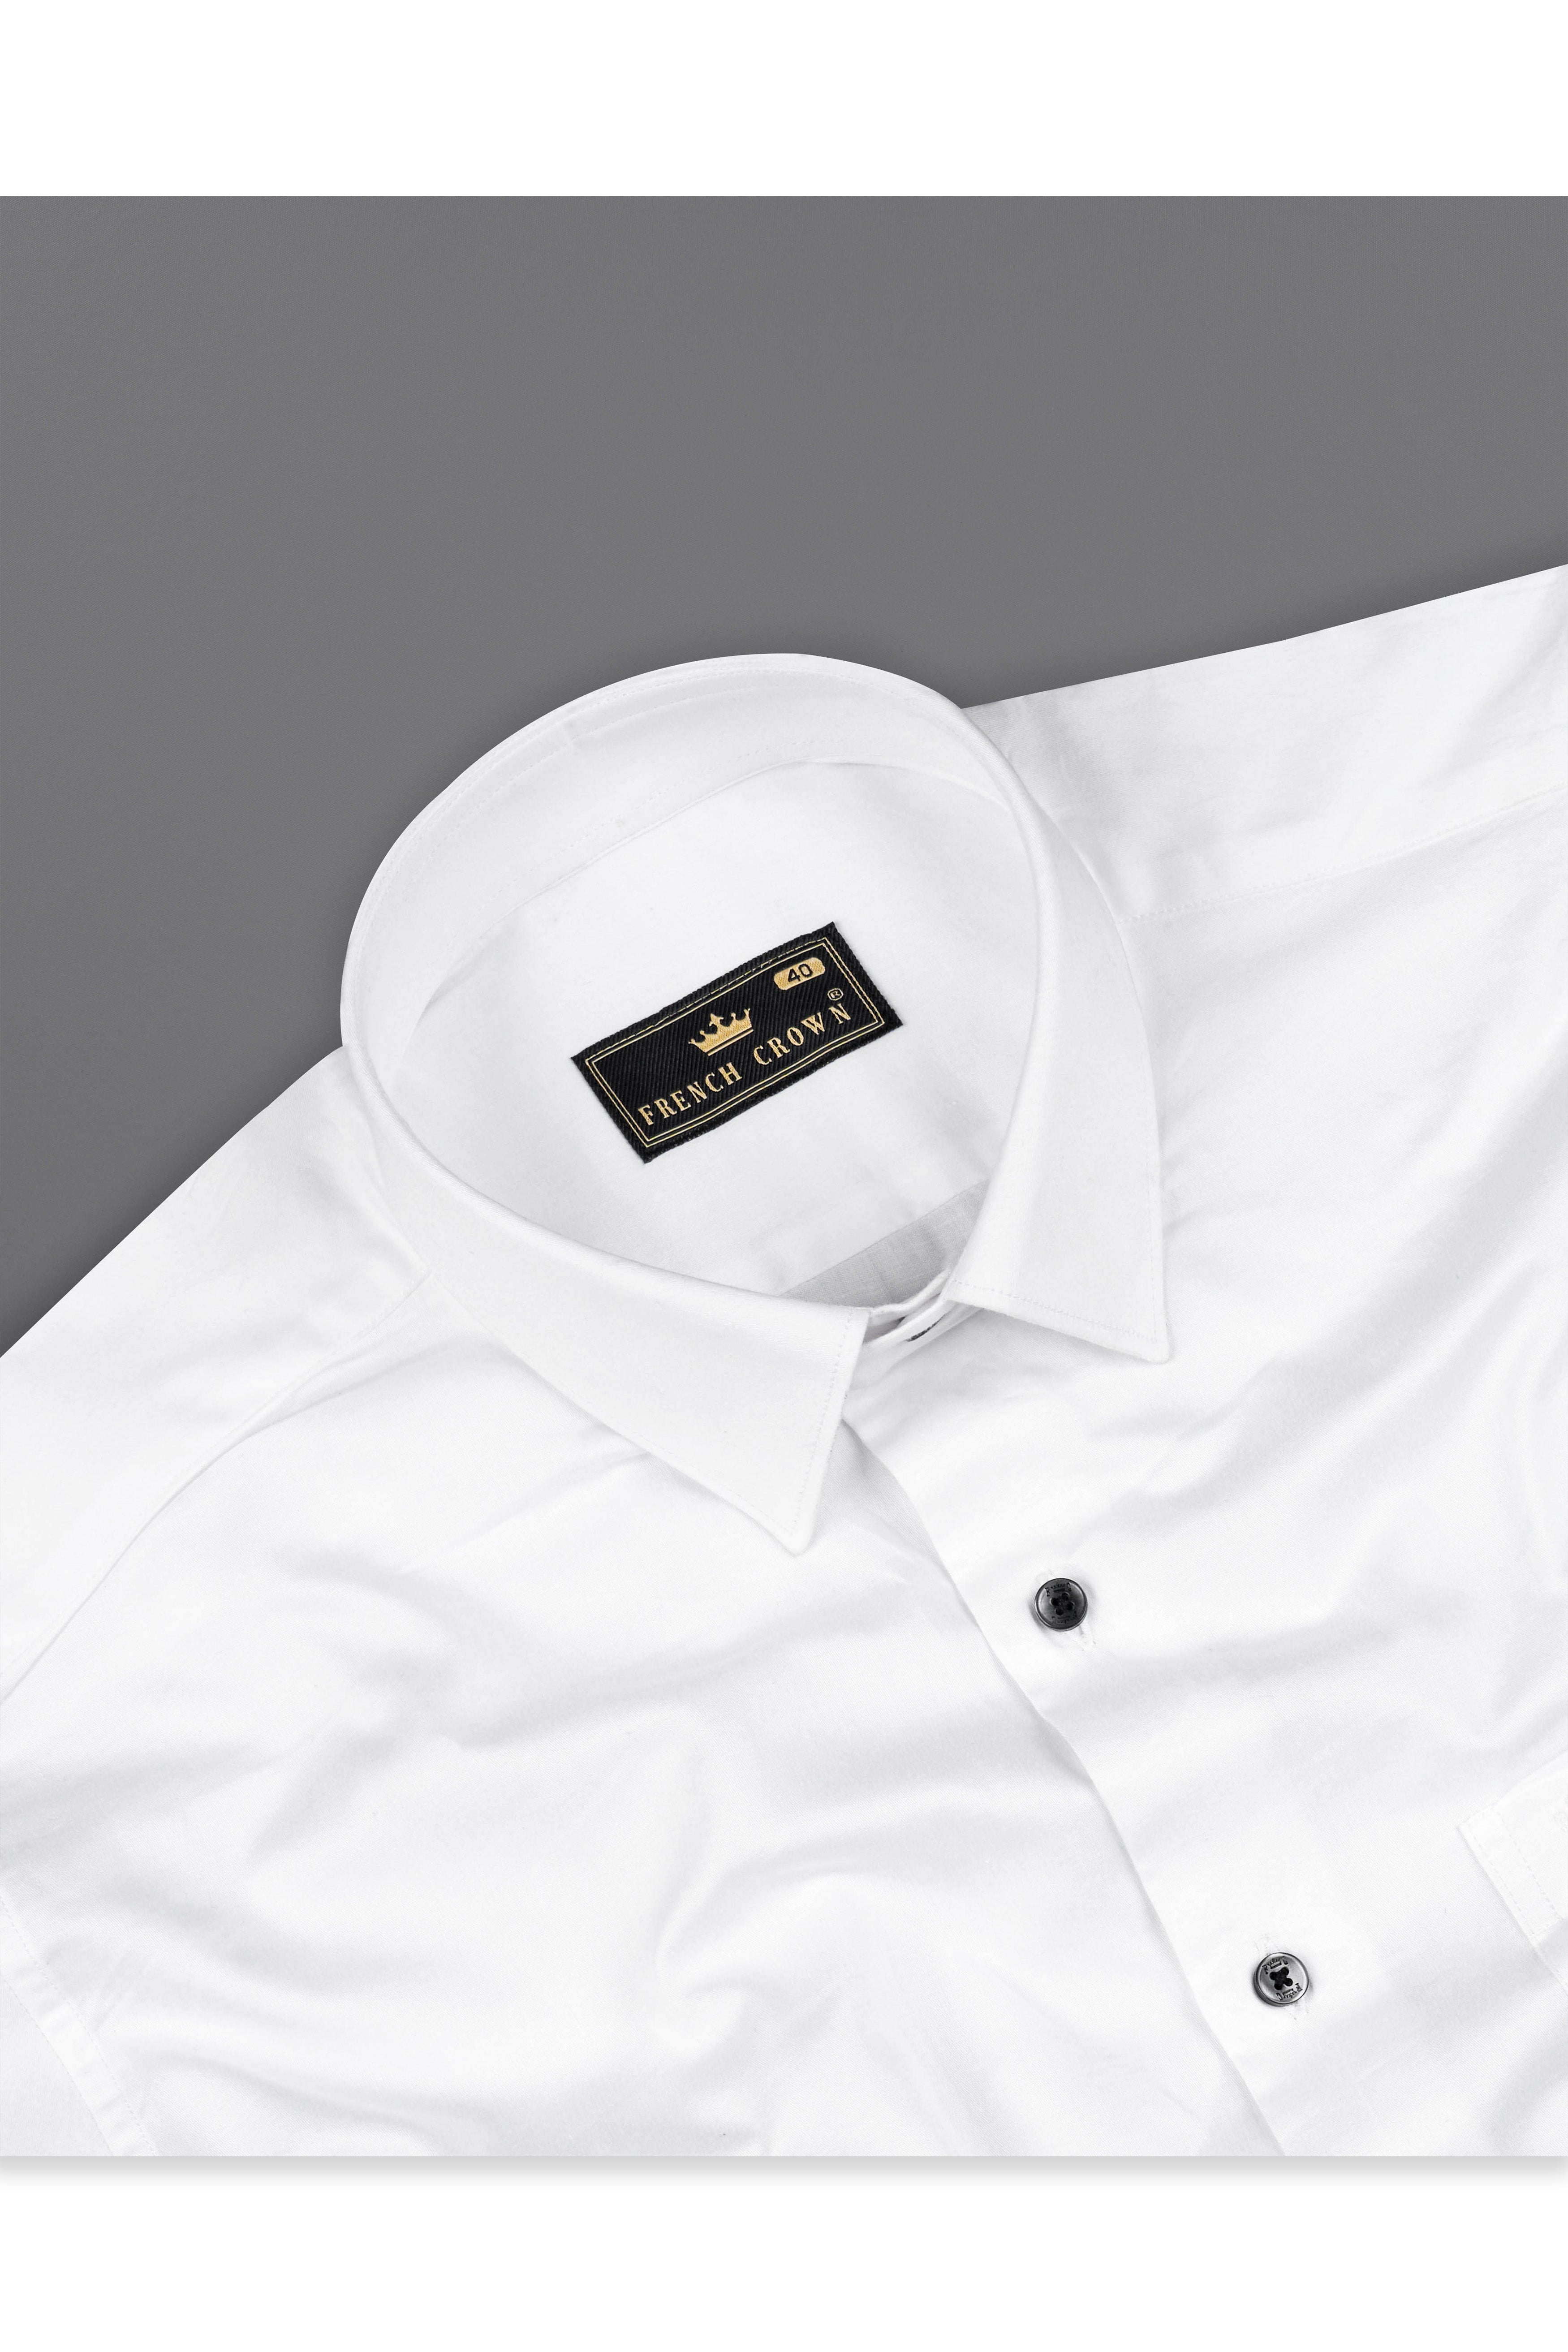 Bright White Subtle Sheen with Left Shoulder Tricolour Embroidered Super Soft Premium Cotton Shirt